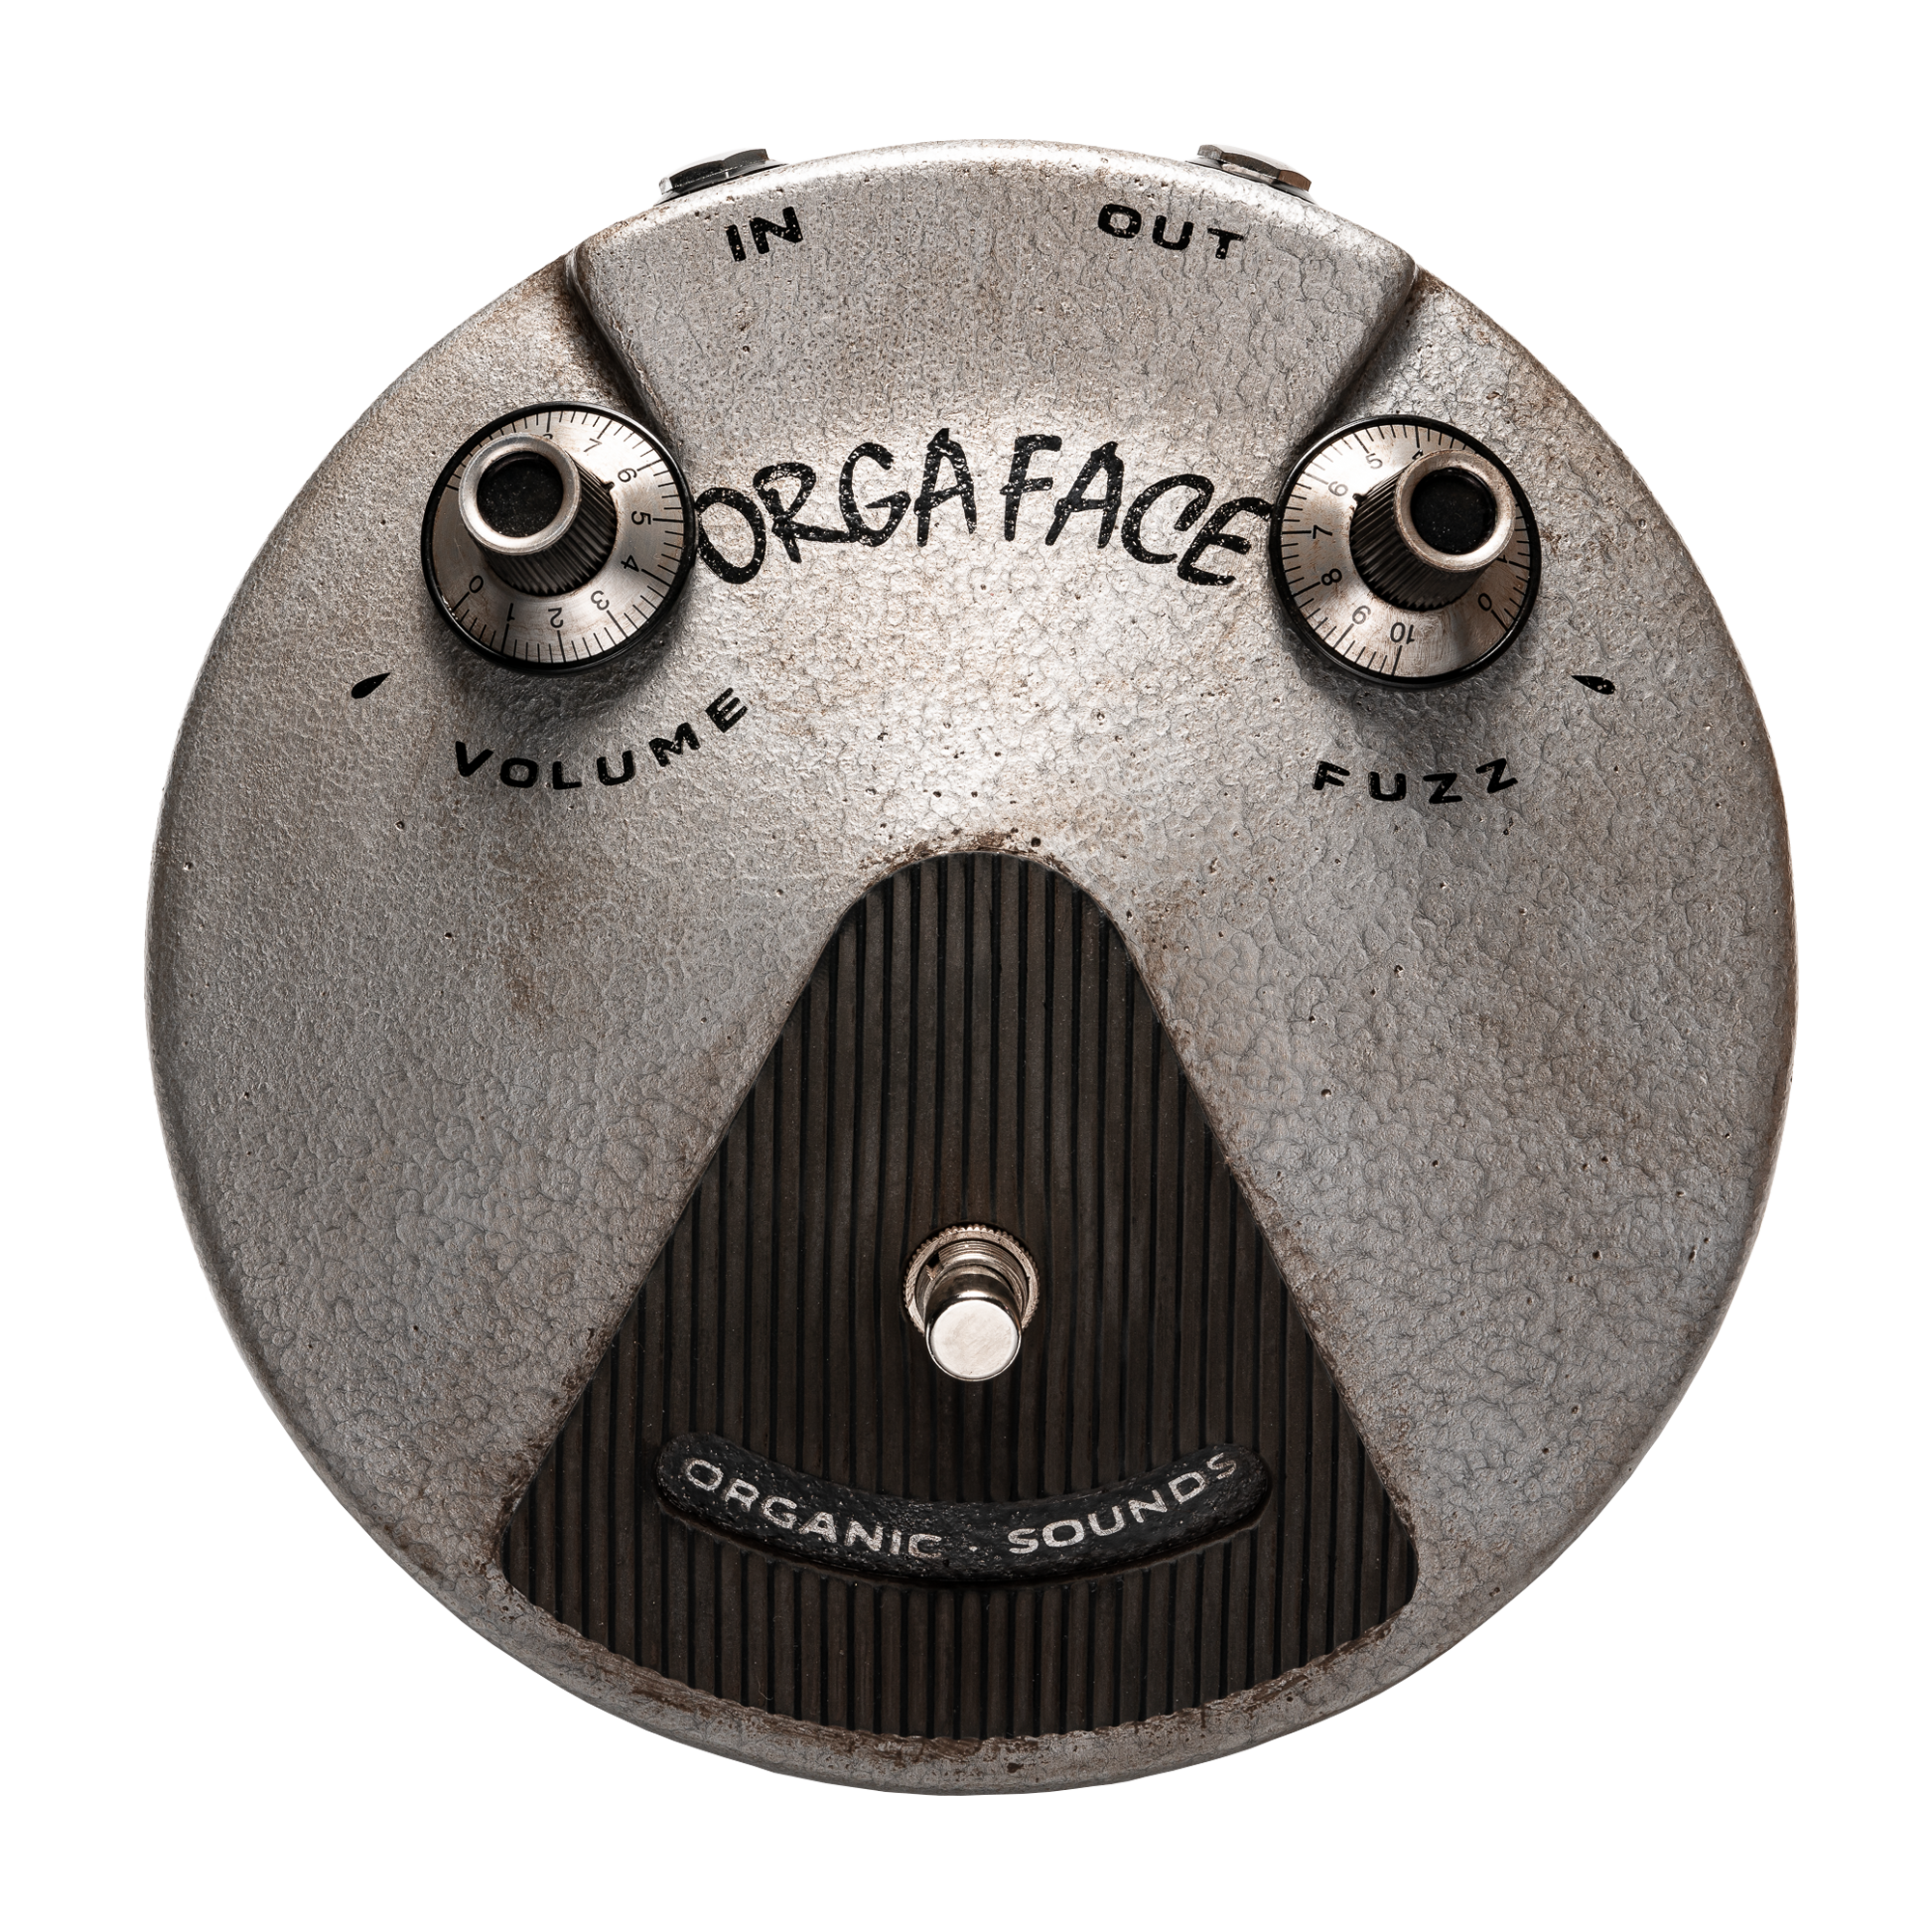 Organic sounds ORGA FACE 66